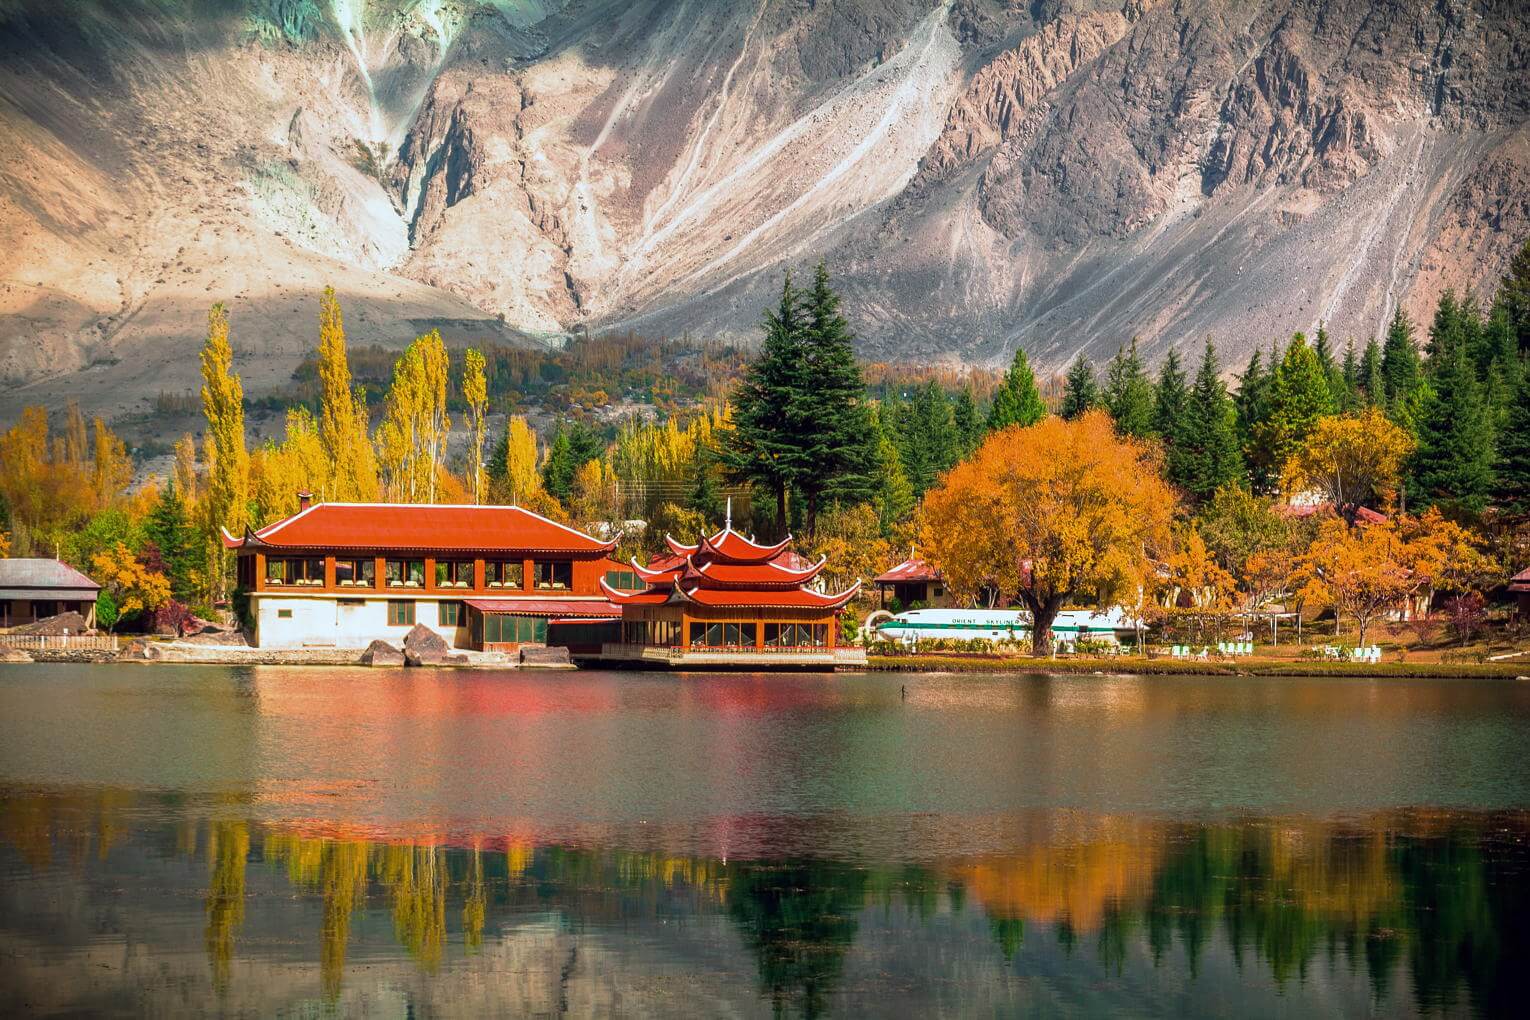 Lower Kachura Lake, also known as Shangrila Lake, Pakistan